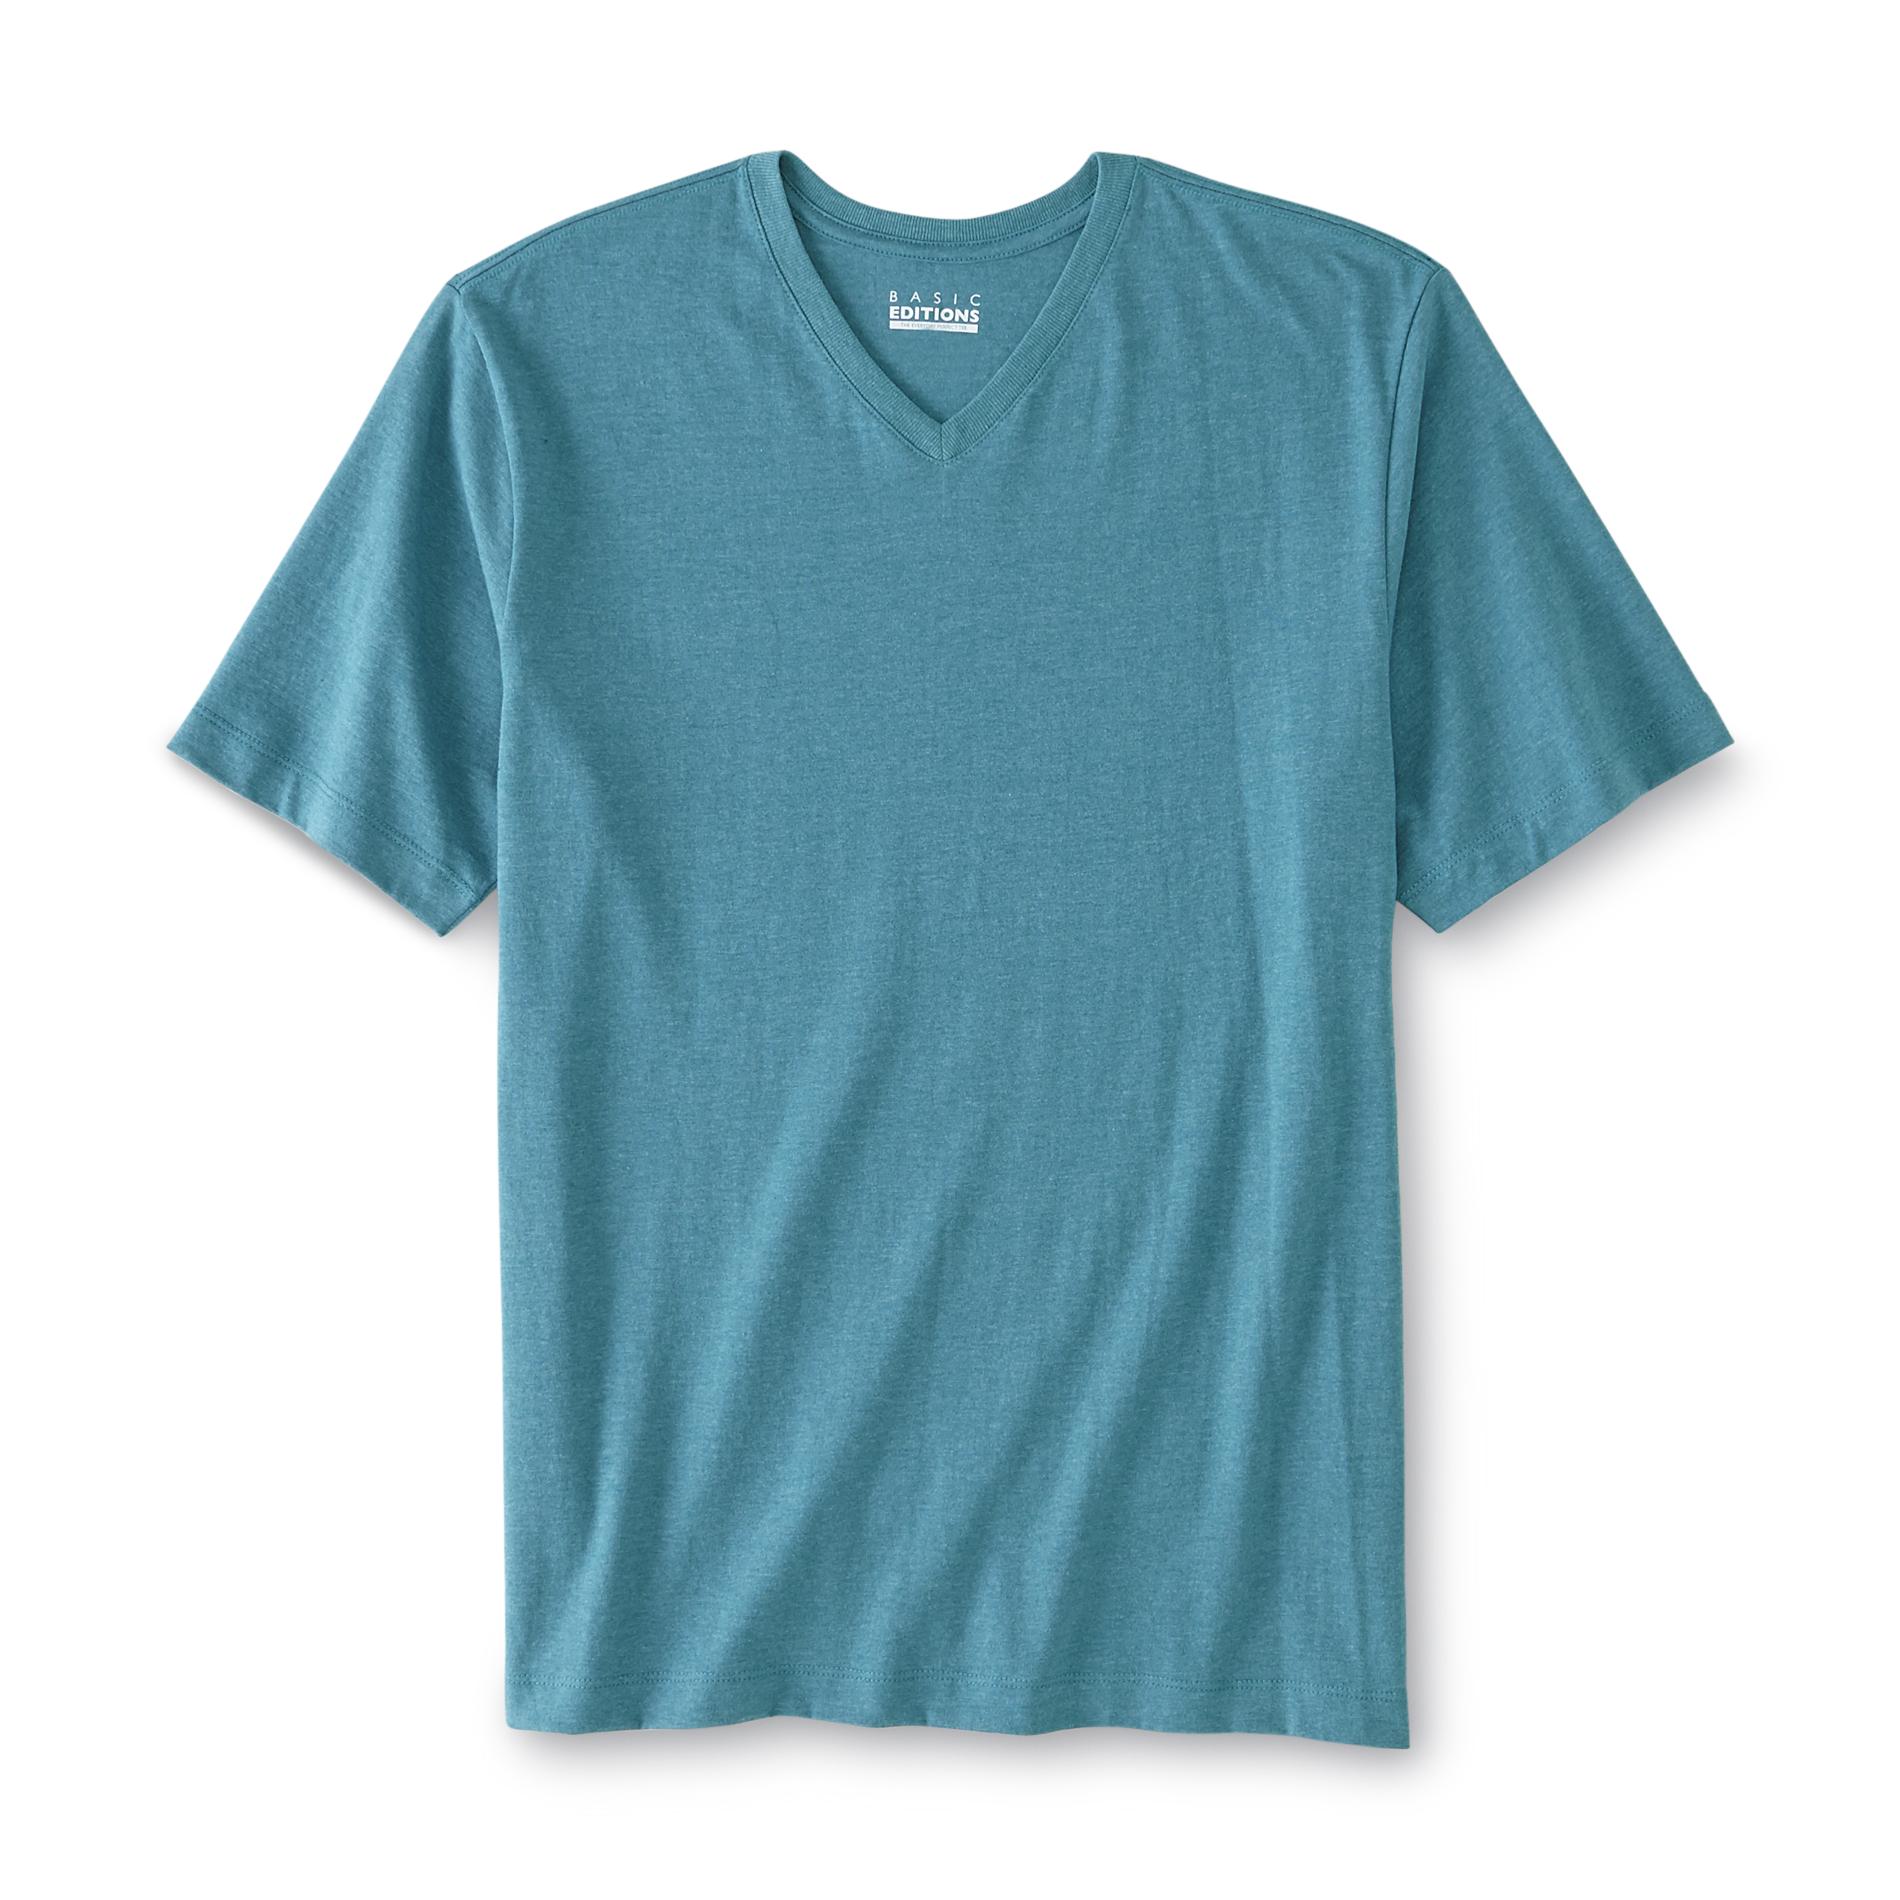 Basic Editions Men's V-Neck T-Shirt